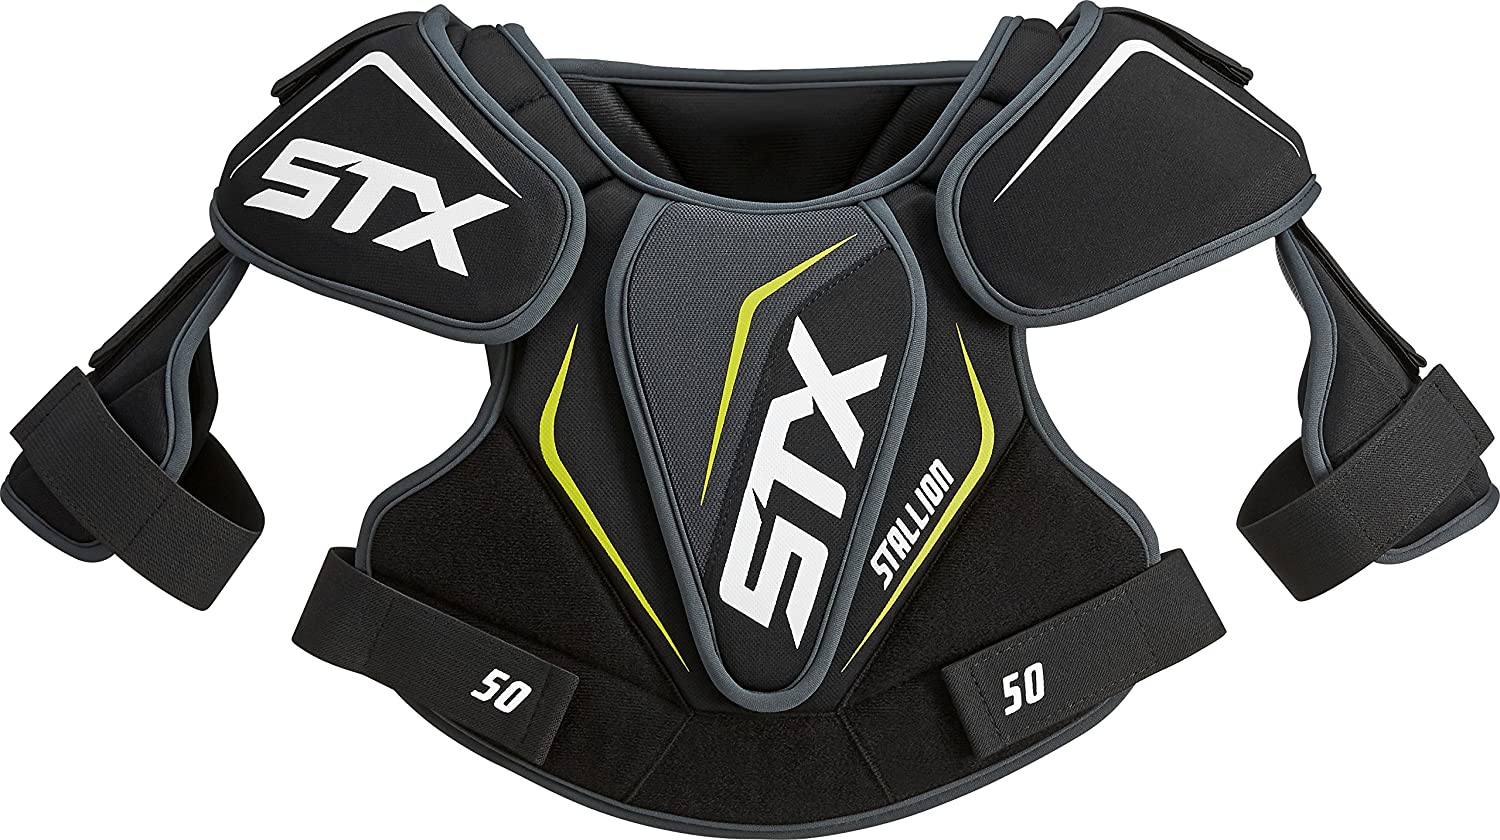 STX Stallion 50 Shoulder Lacrosse Pad